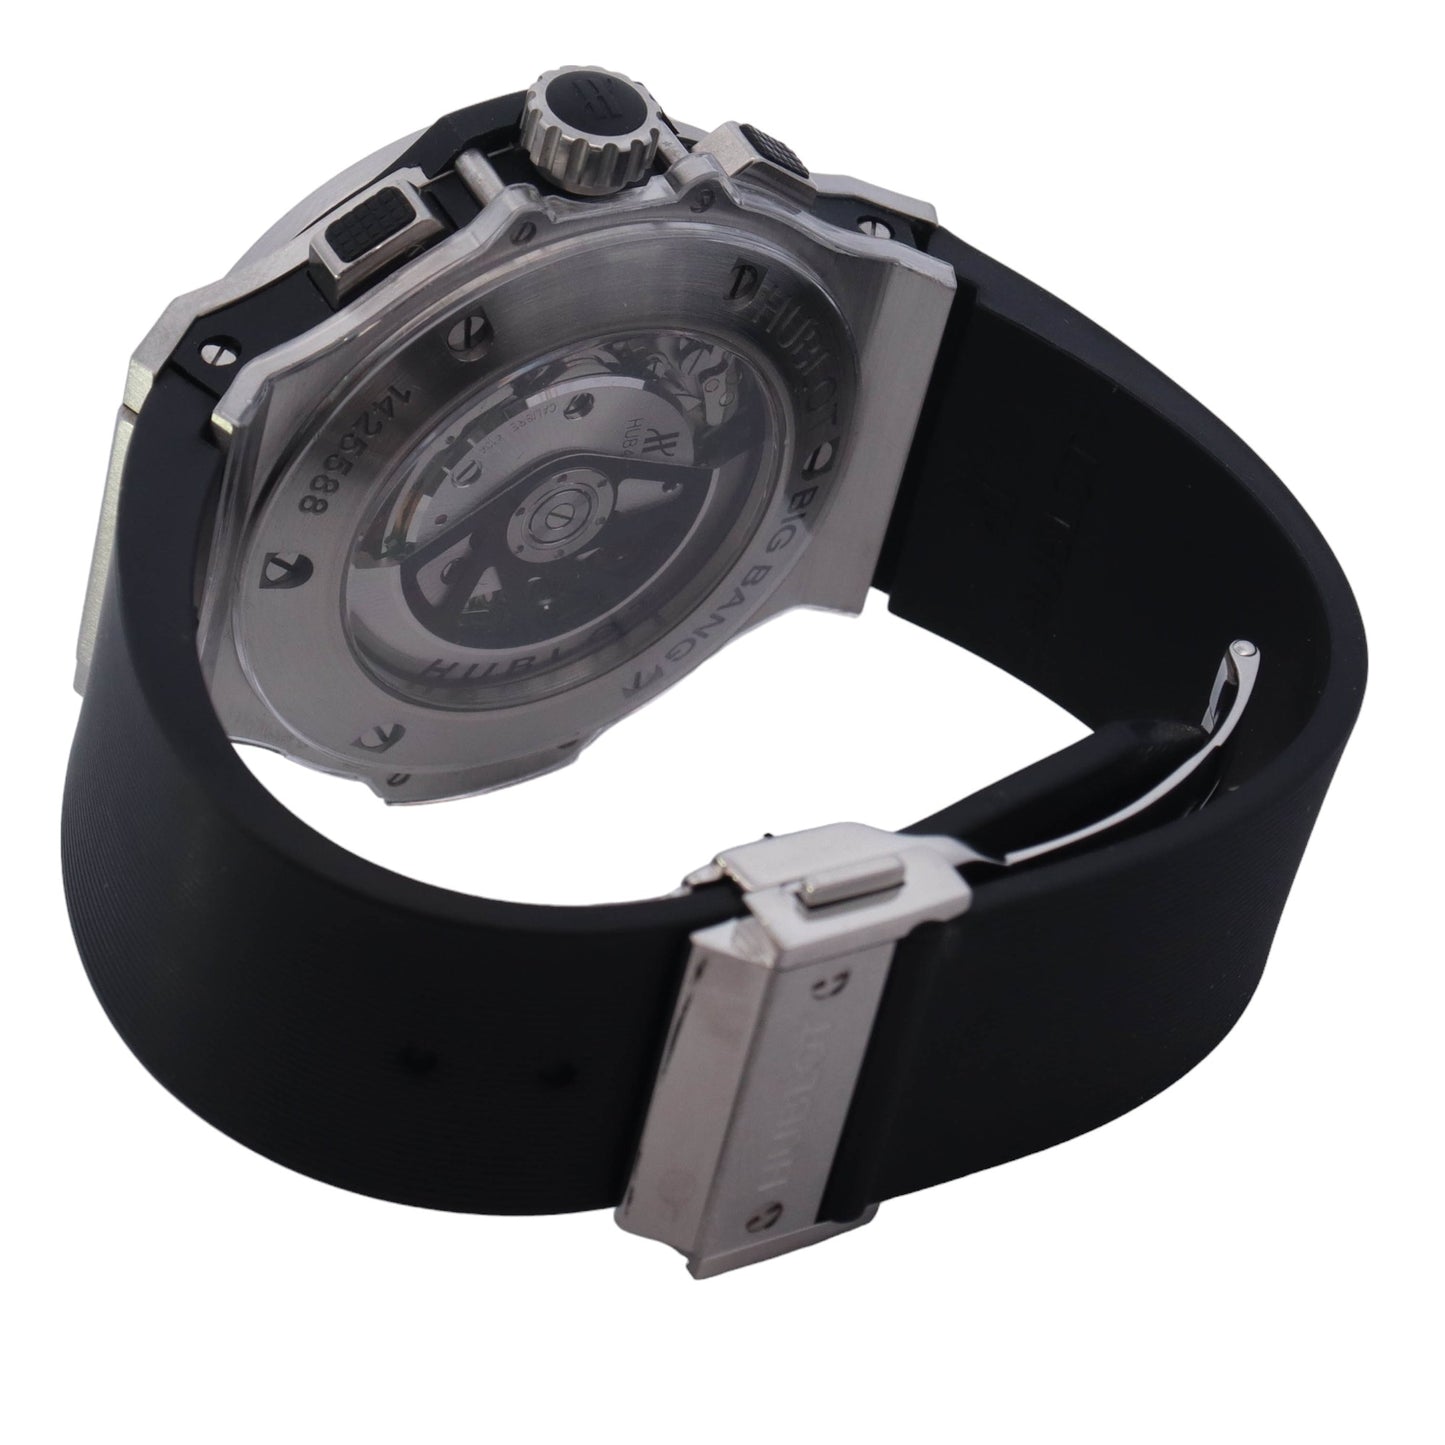 Hublot Big Bang Stainless Steel 44mm Black Chrono Dial Watch Reference #: 301.SX.1170.RX - Happy Jewelers Fine Jewelry Lifetime Warranty